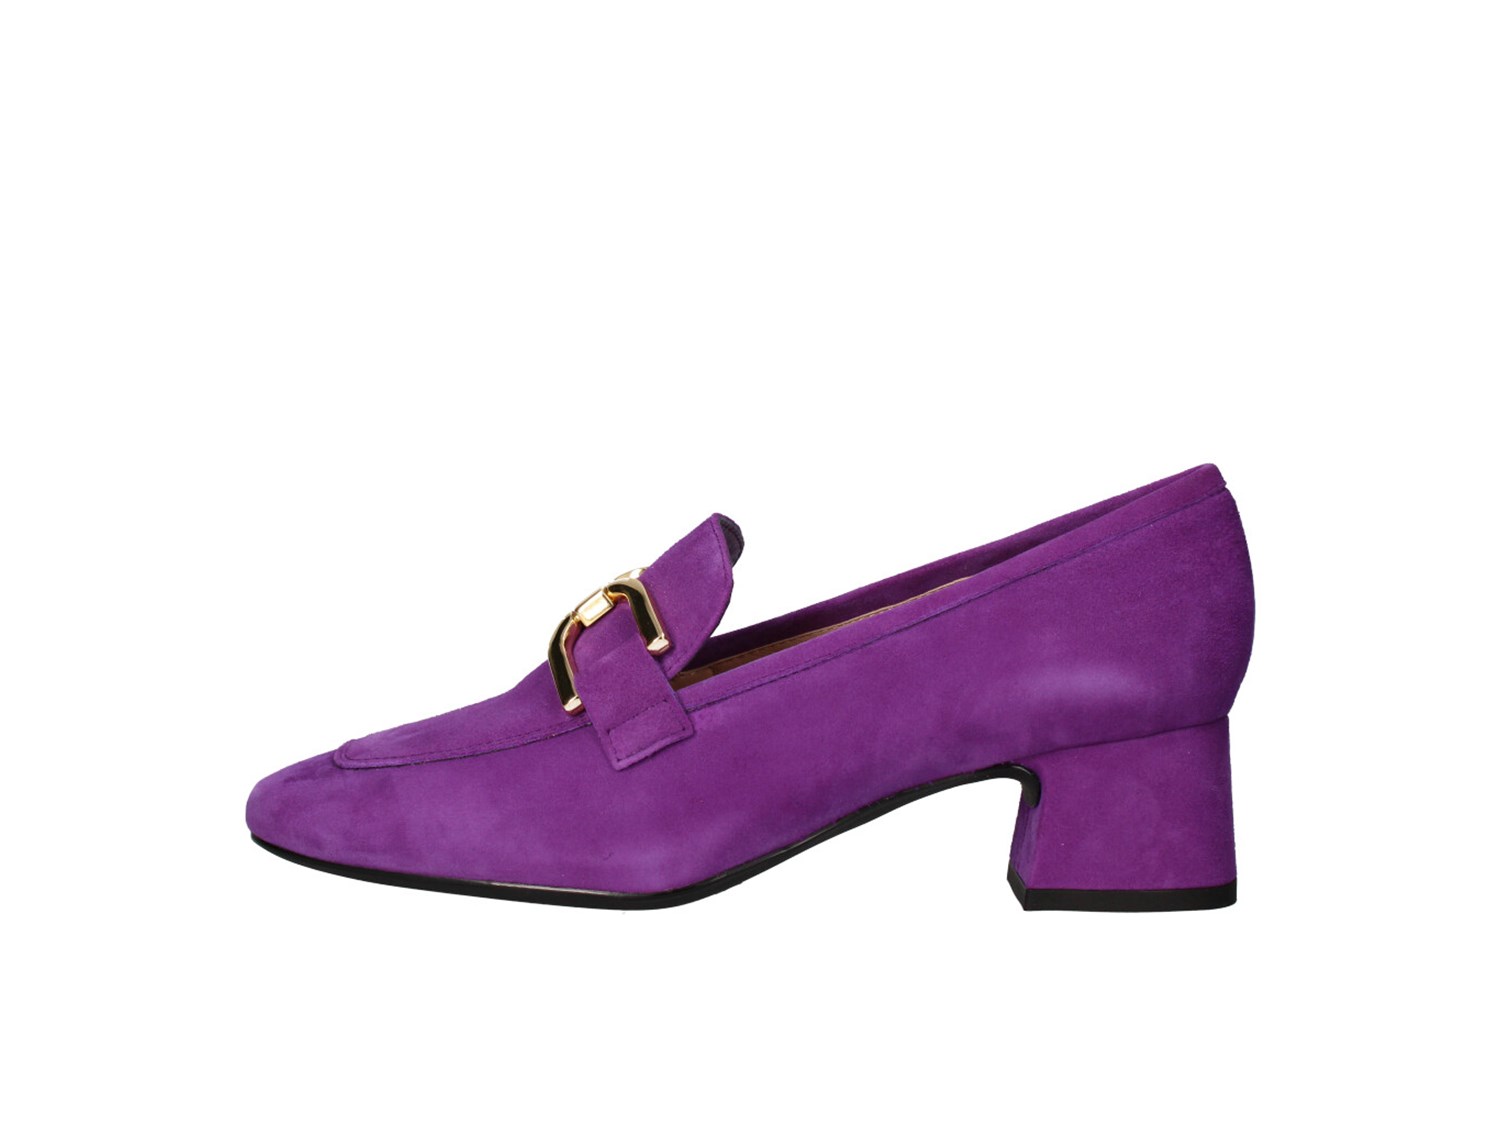 Unisa Losie Violet Shoes Women Moccasin